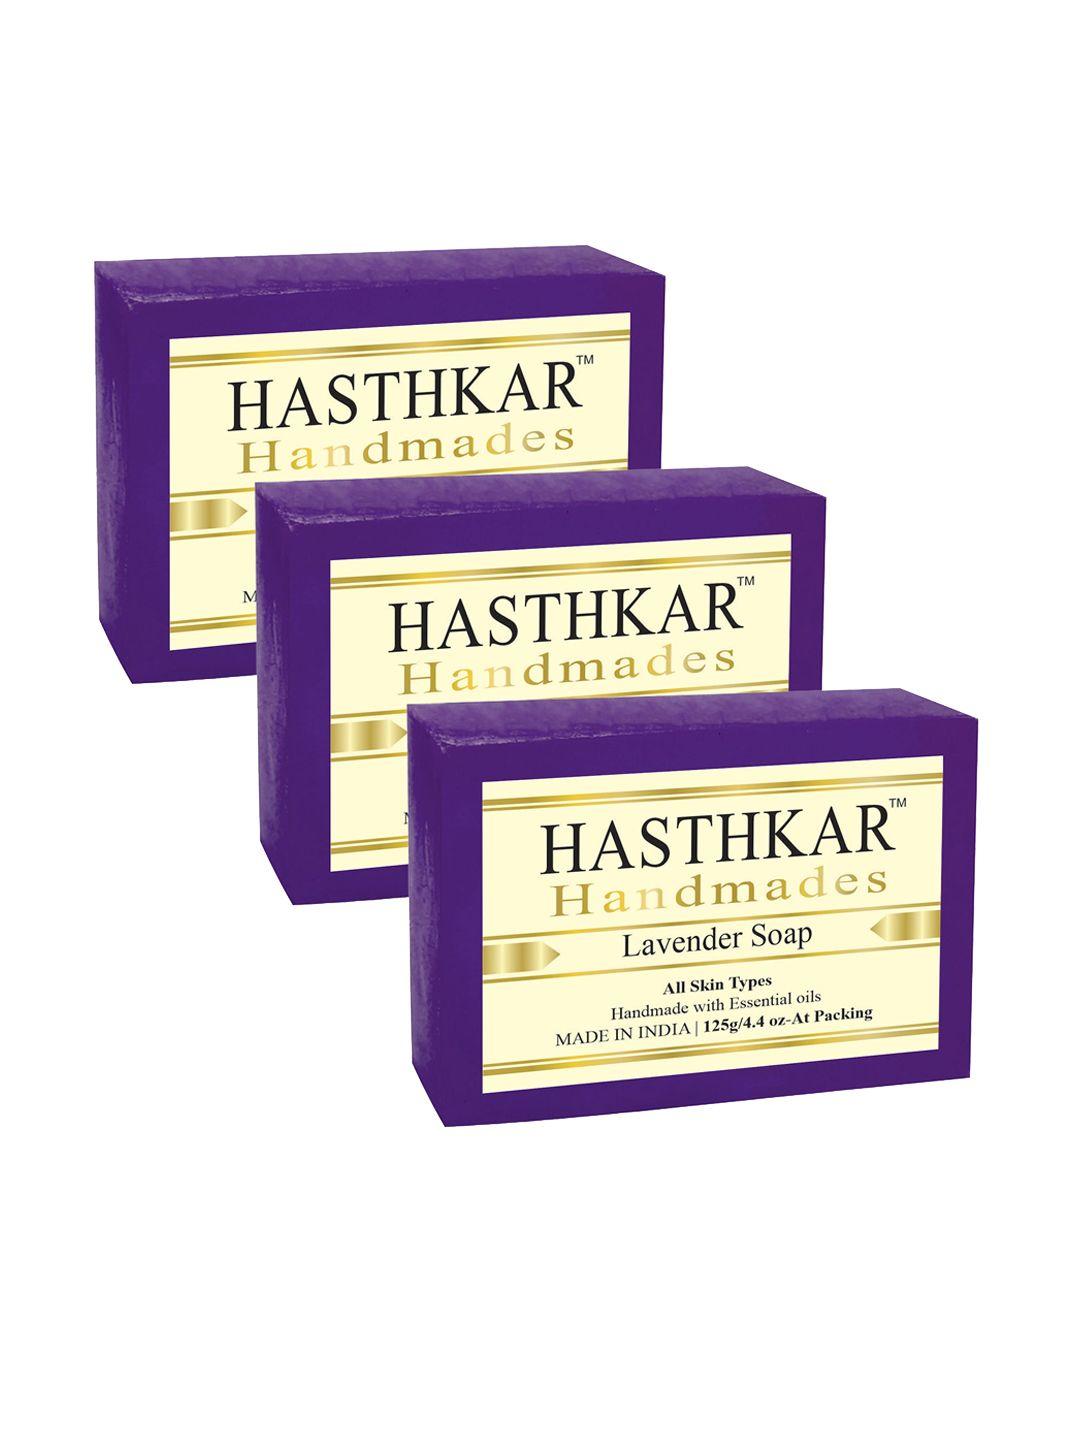 hasthkar handmades set of 3 glycerine lavender soap